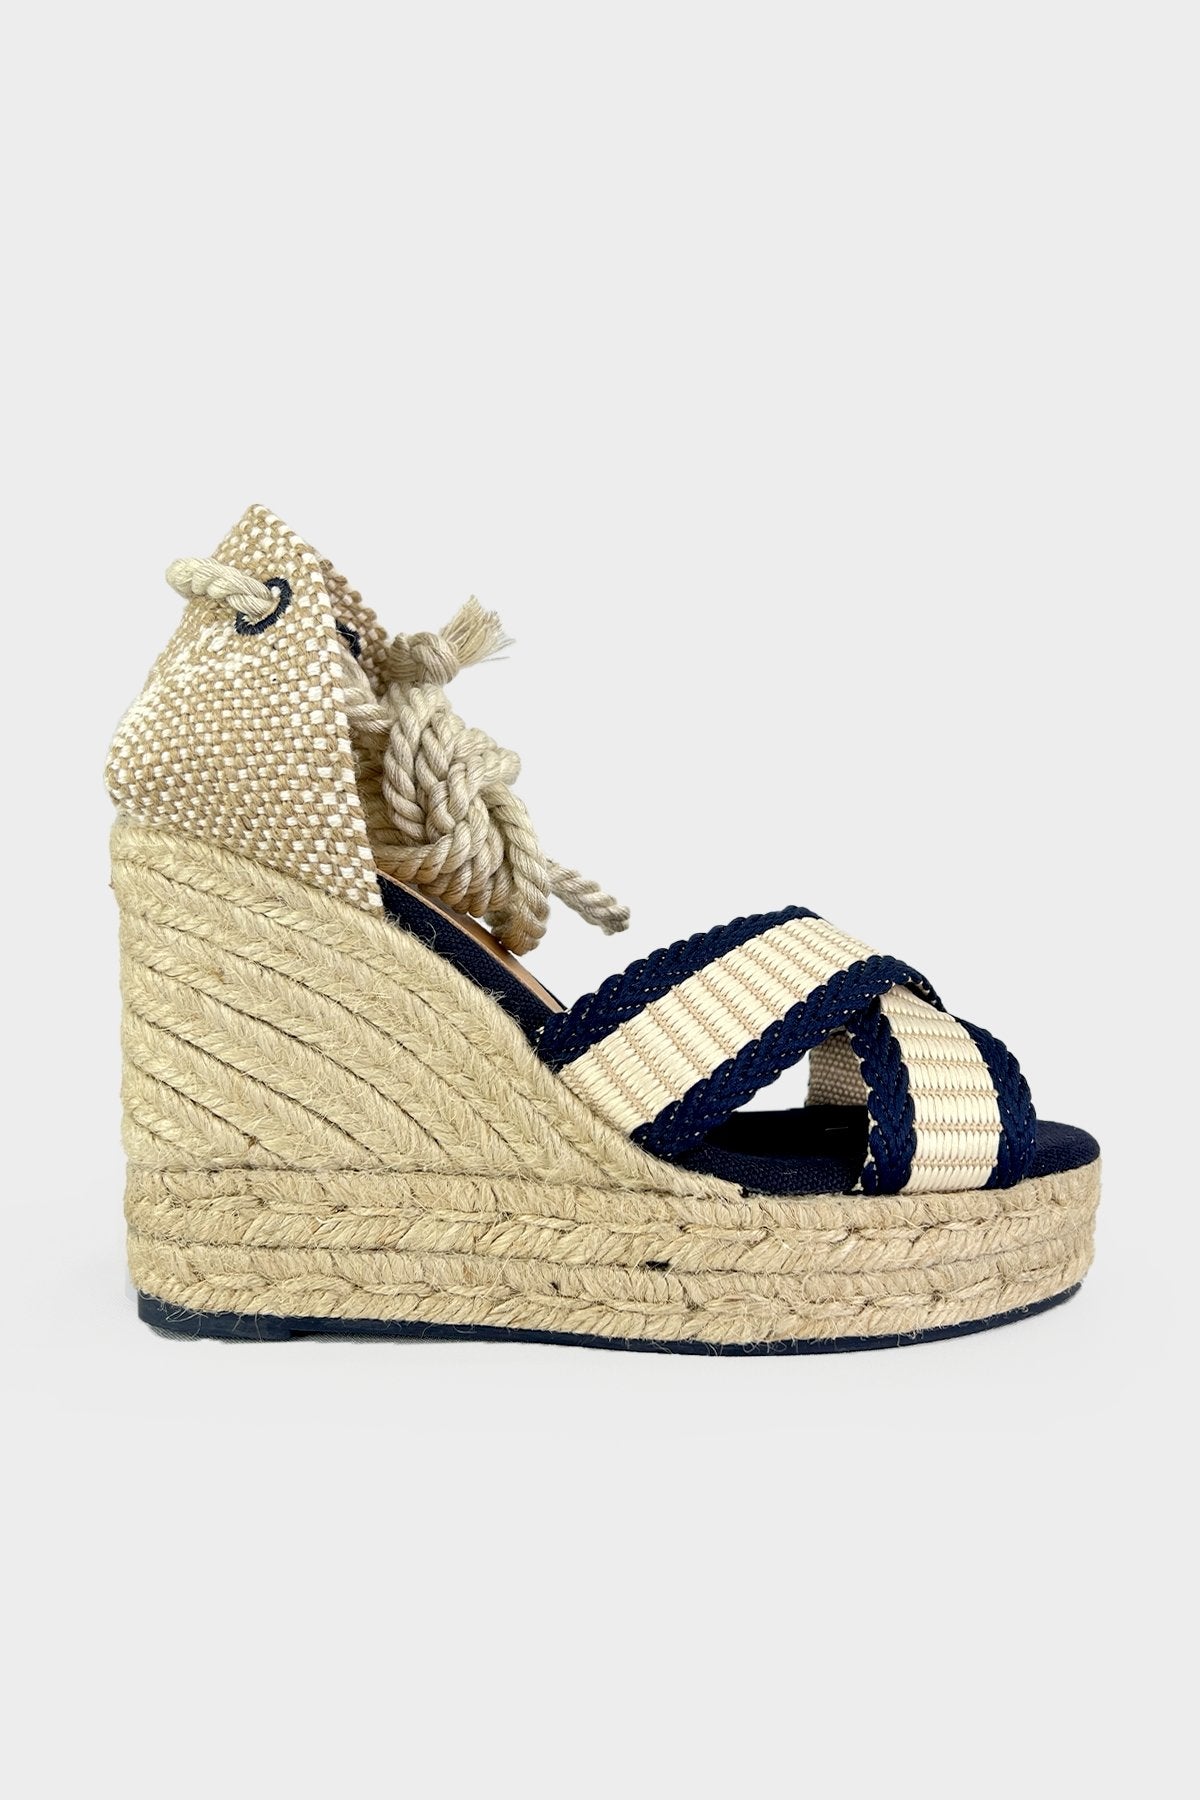 Belisa Ankle Wrap Wedge Sandal in Azul Marino/Crudo - shop-olivia.com